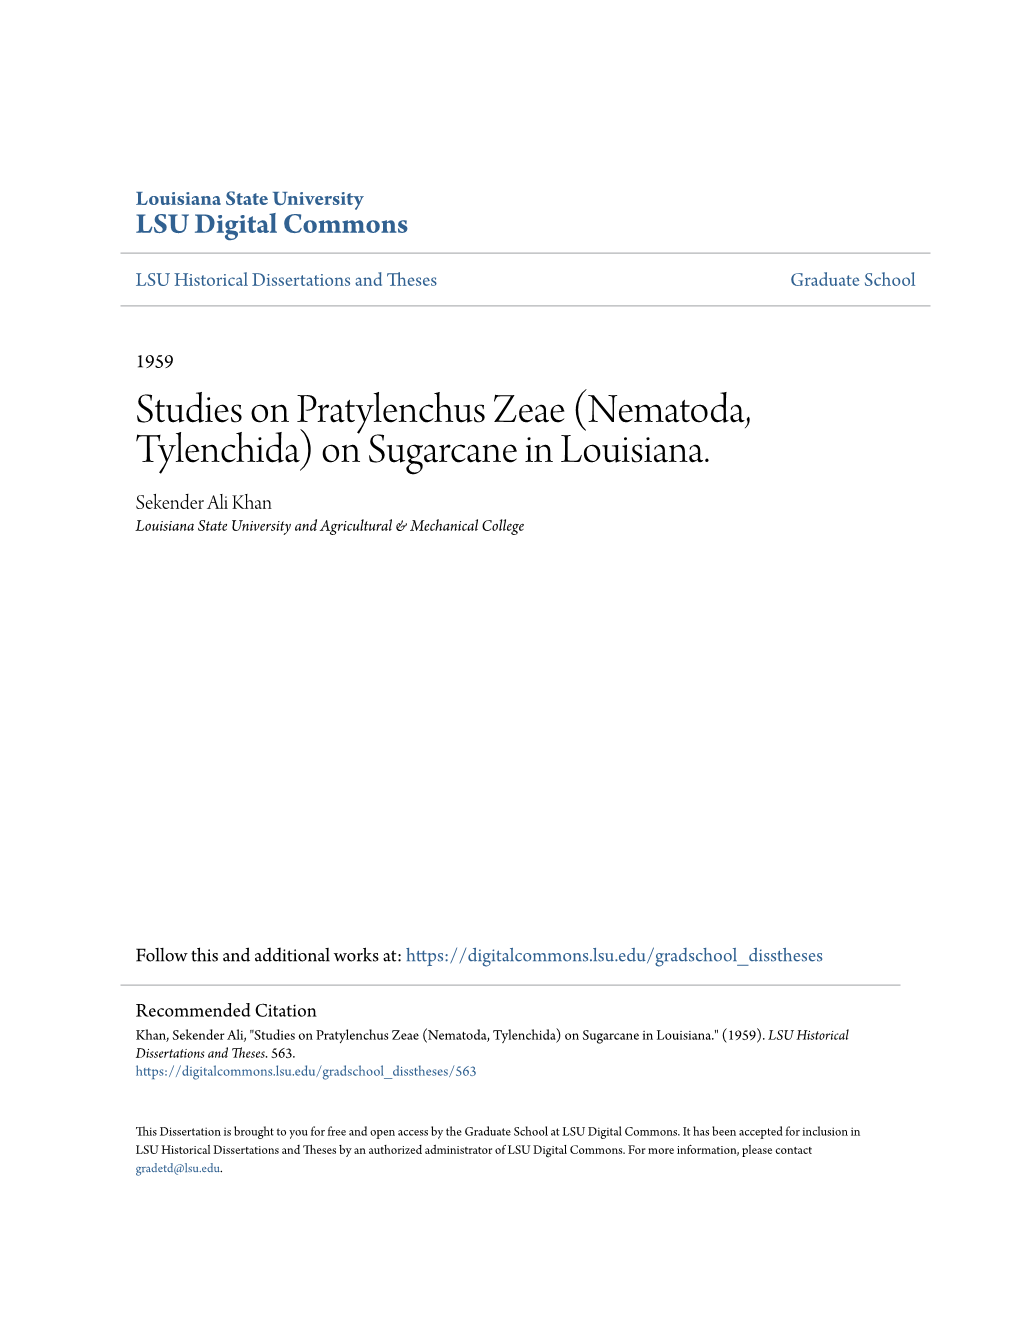 Studies on Pratylenchus Zeae (Nematoda, Tylenchida) on Sugarcane in Louisiana